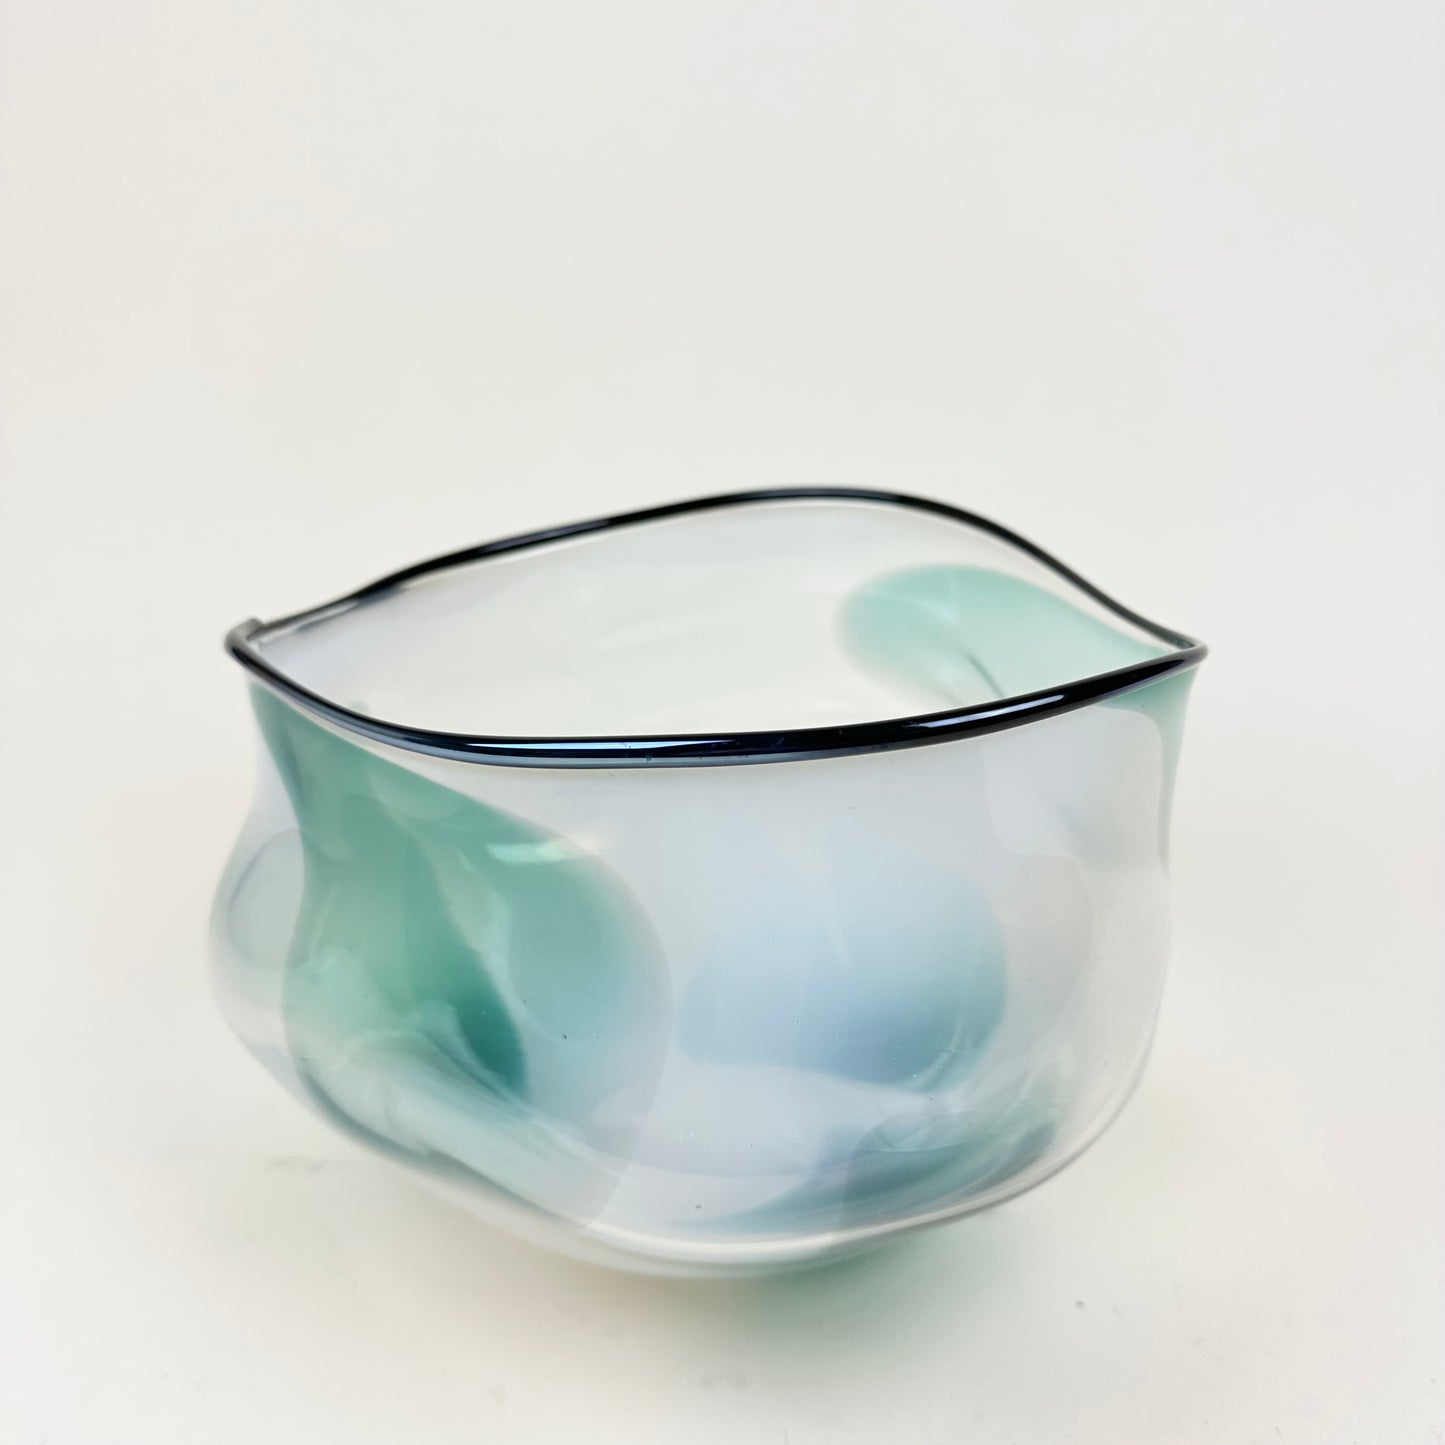 Glass bowl by Silje LIndrup